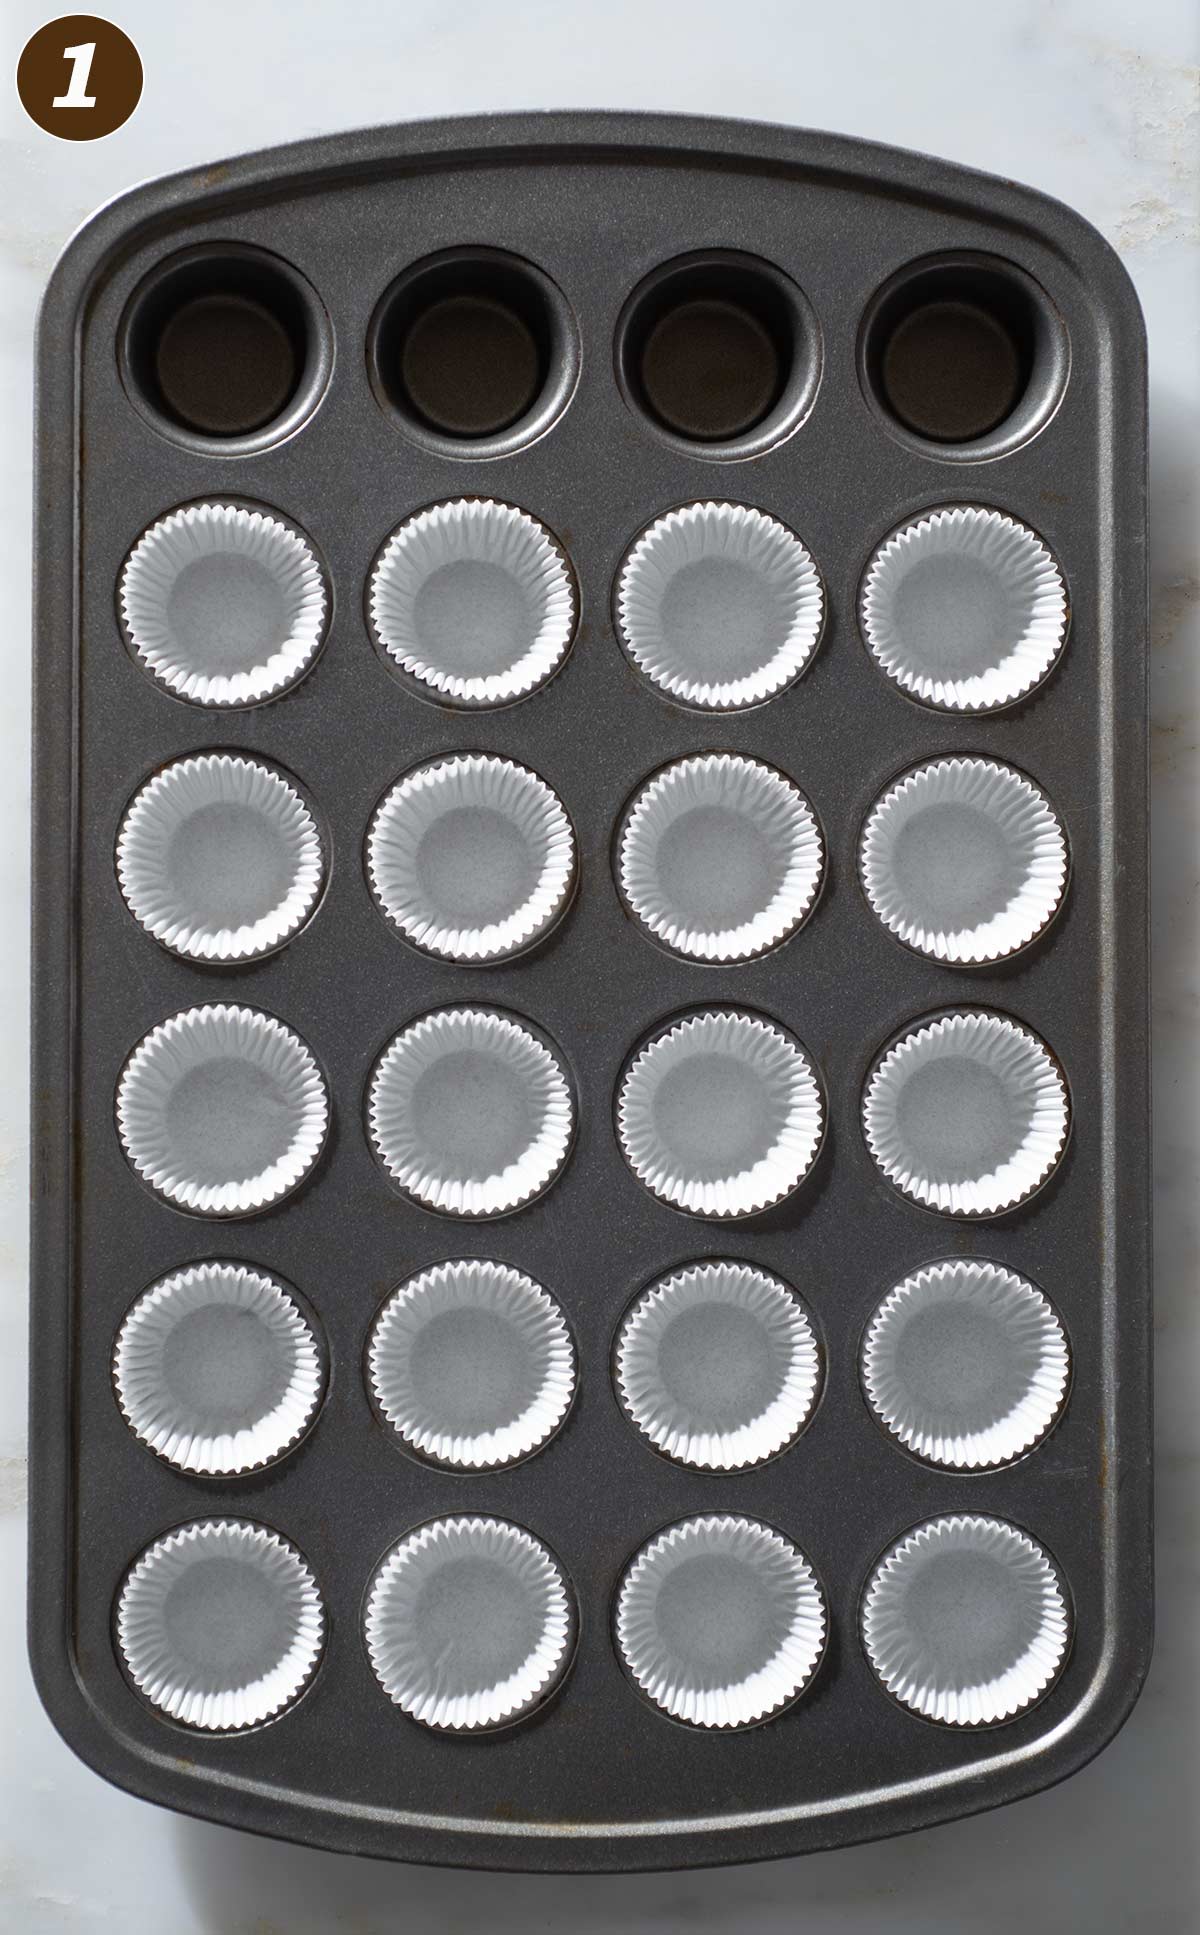 Mini cupcake pan with liners.